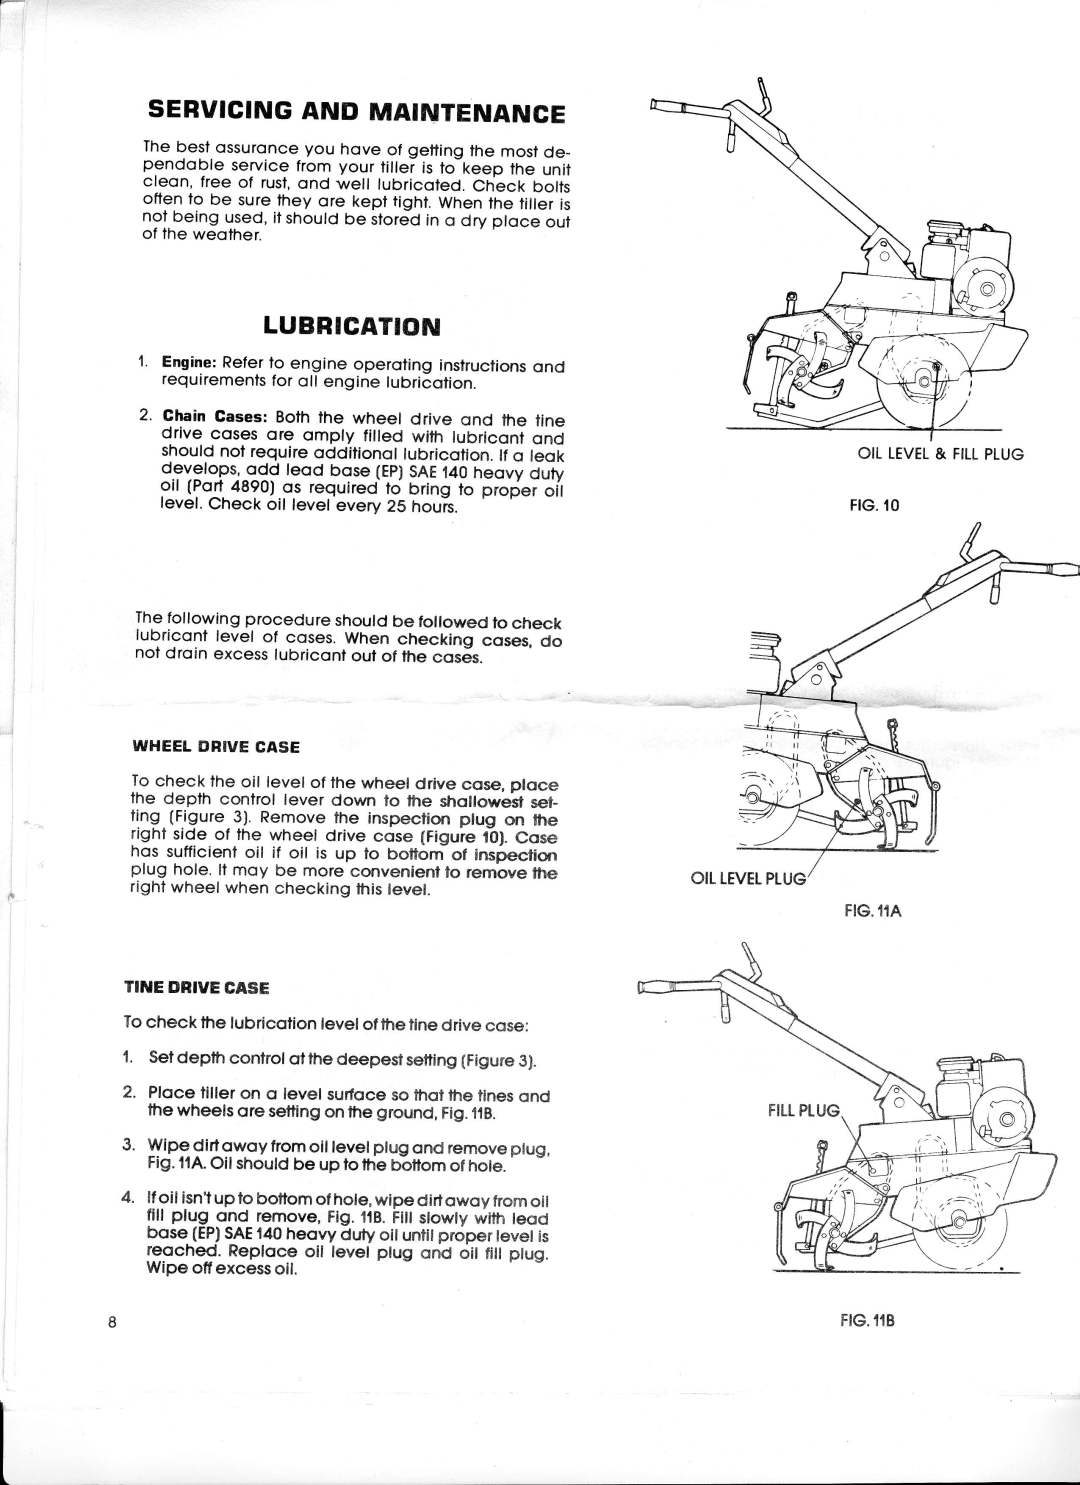 Ward's GIL-39012B manual Servigingand Maintenange, Lubrication, FrGt0 